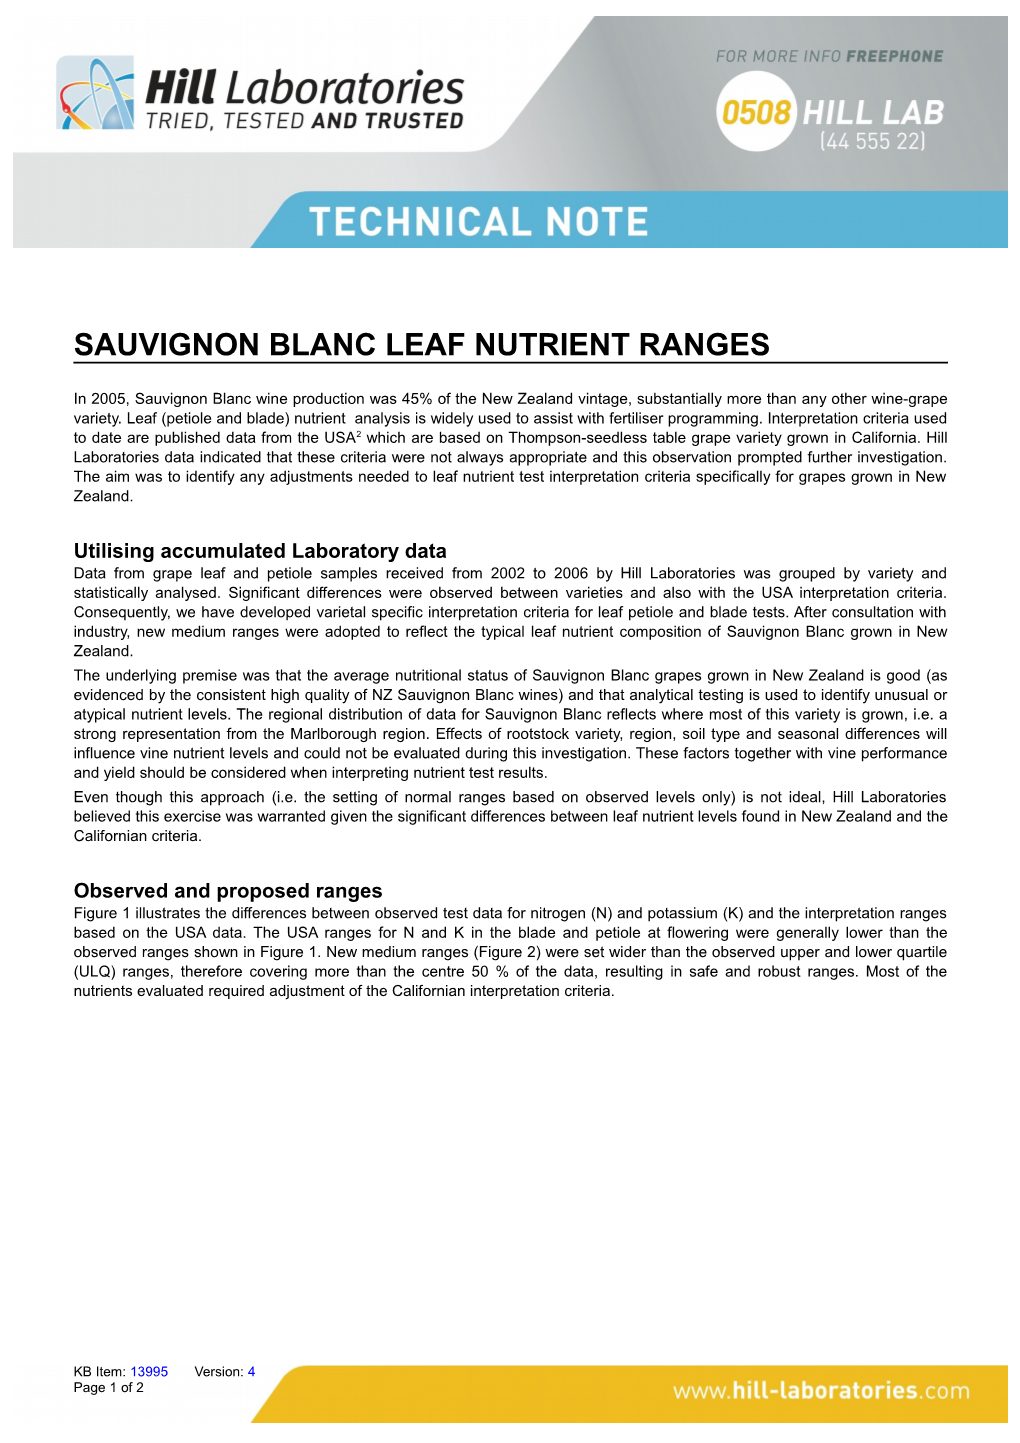 Sauvignon Blanc Leaf Nutrient Ranges